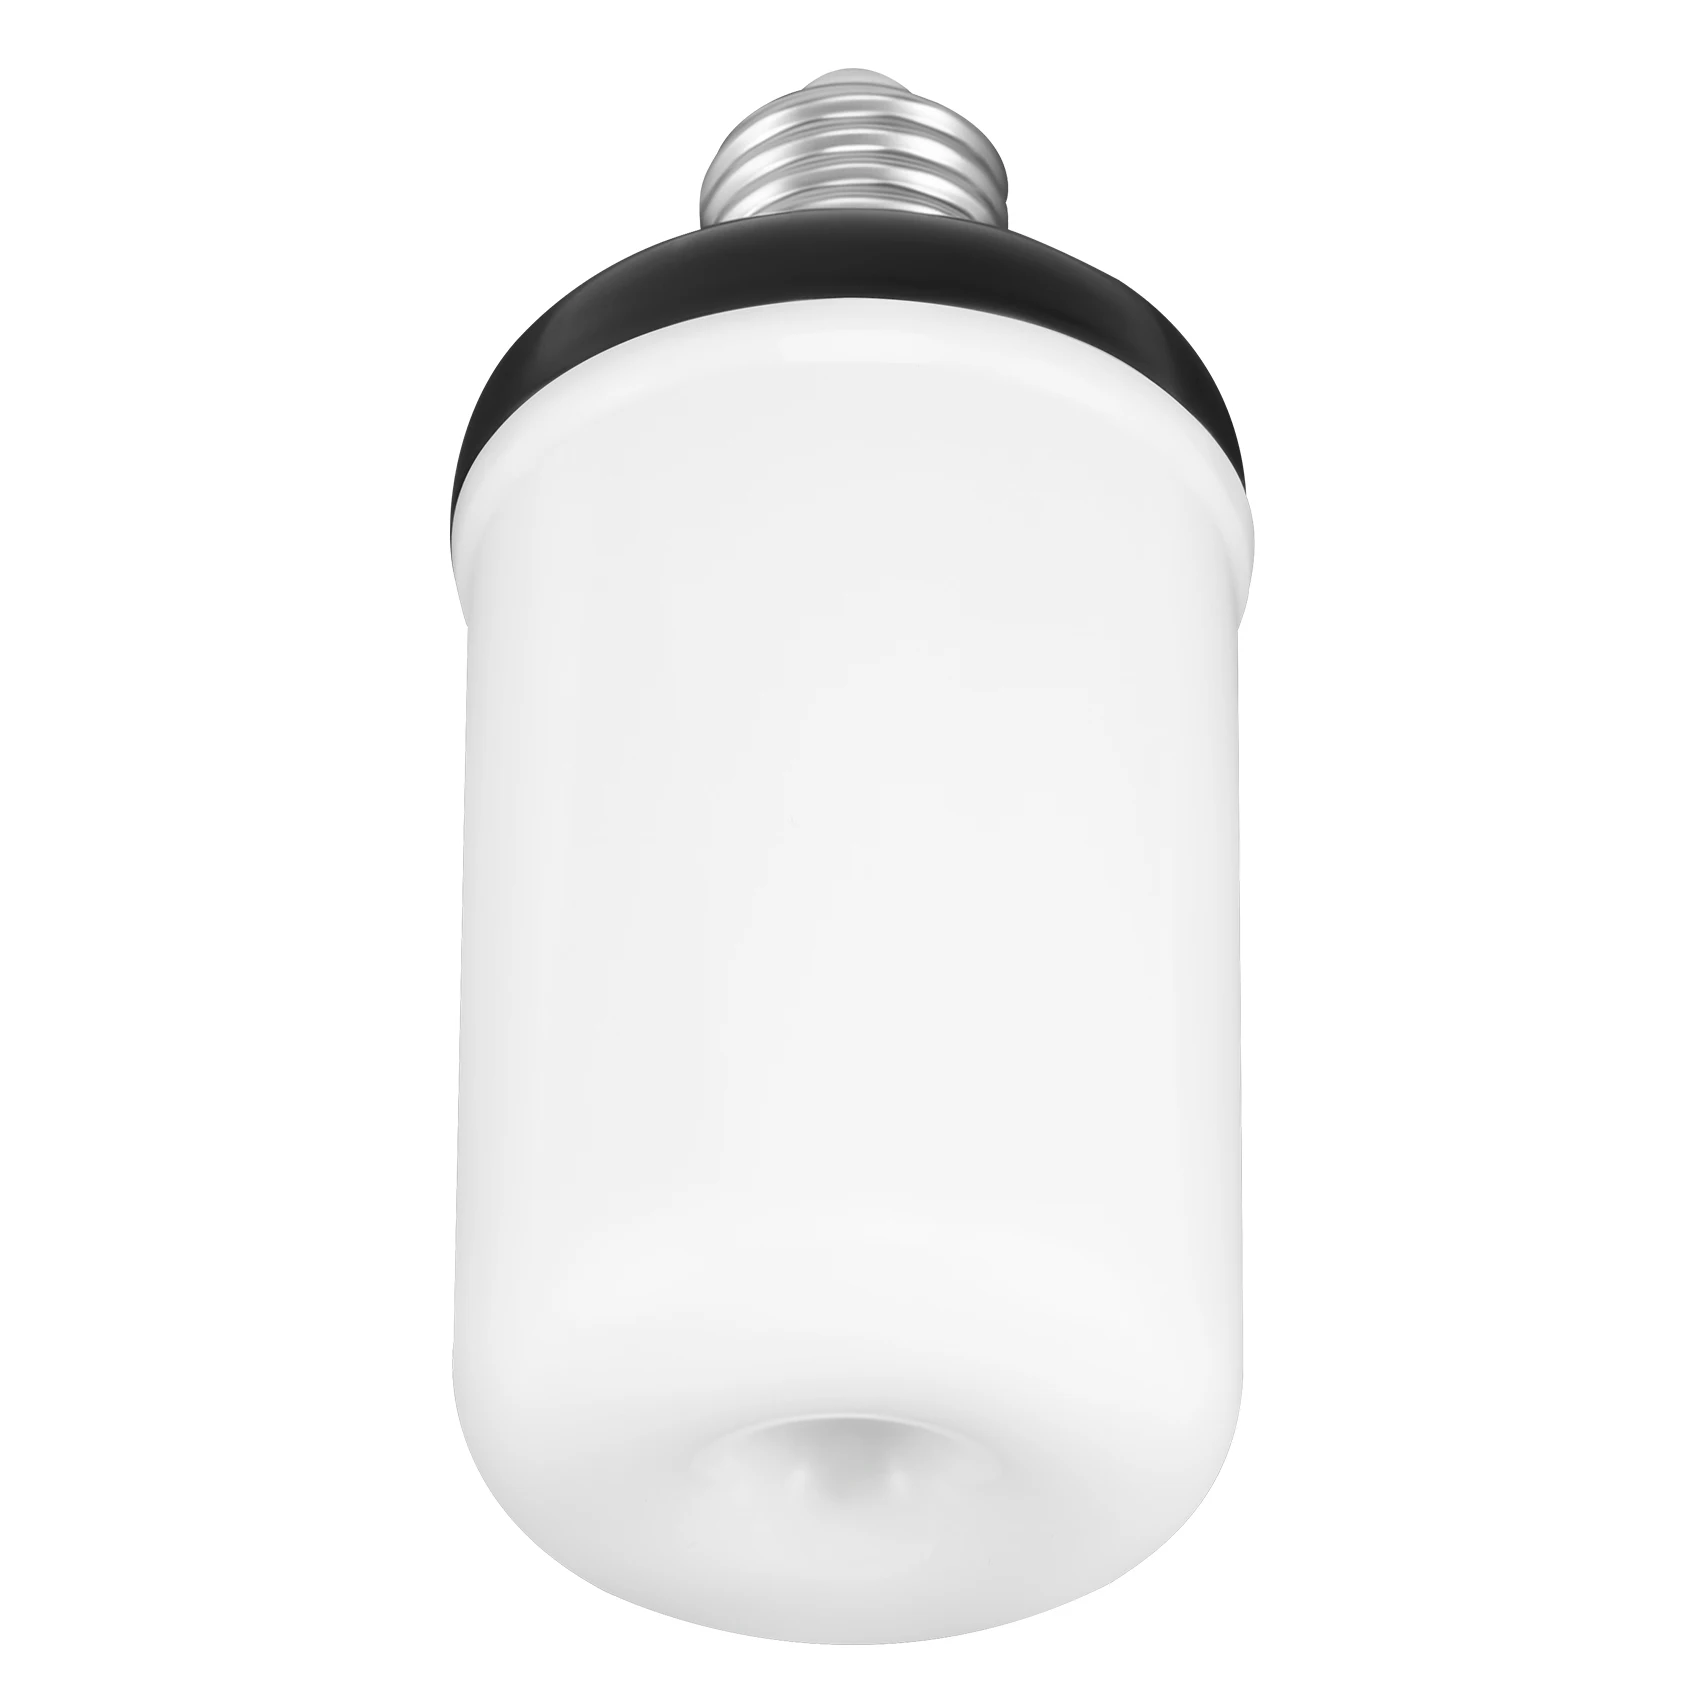 

LED Flame Effect Light Bulb E27,Decorative Flickering Realistic Fire Lights Bulb,Festival Decoration Lamp